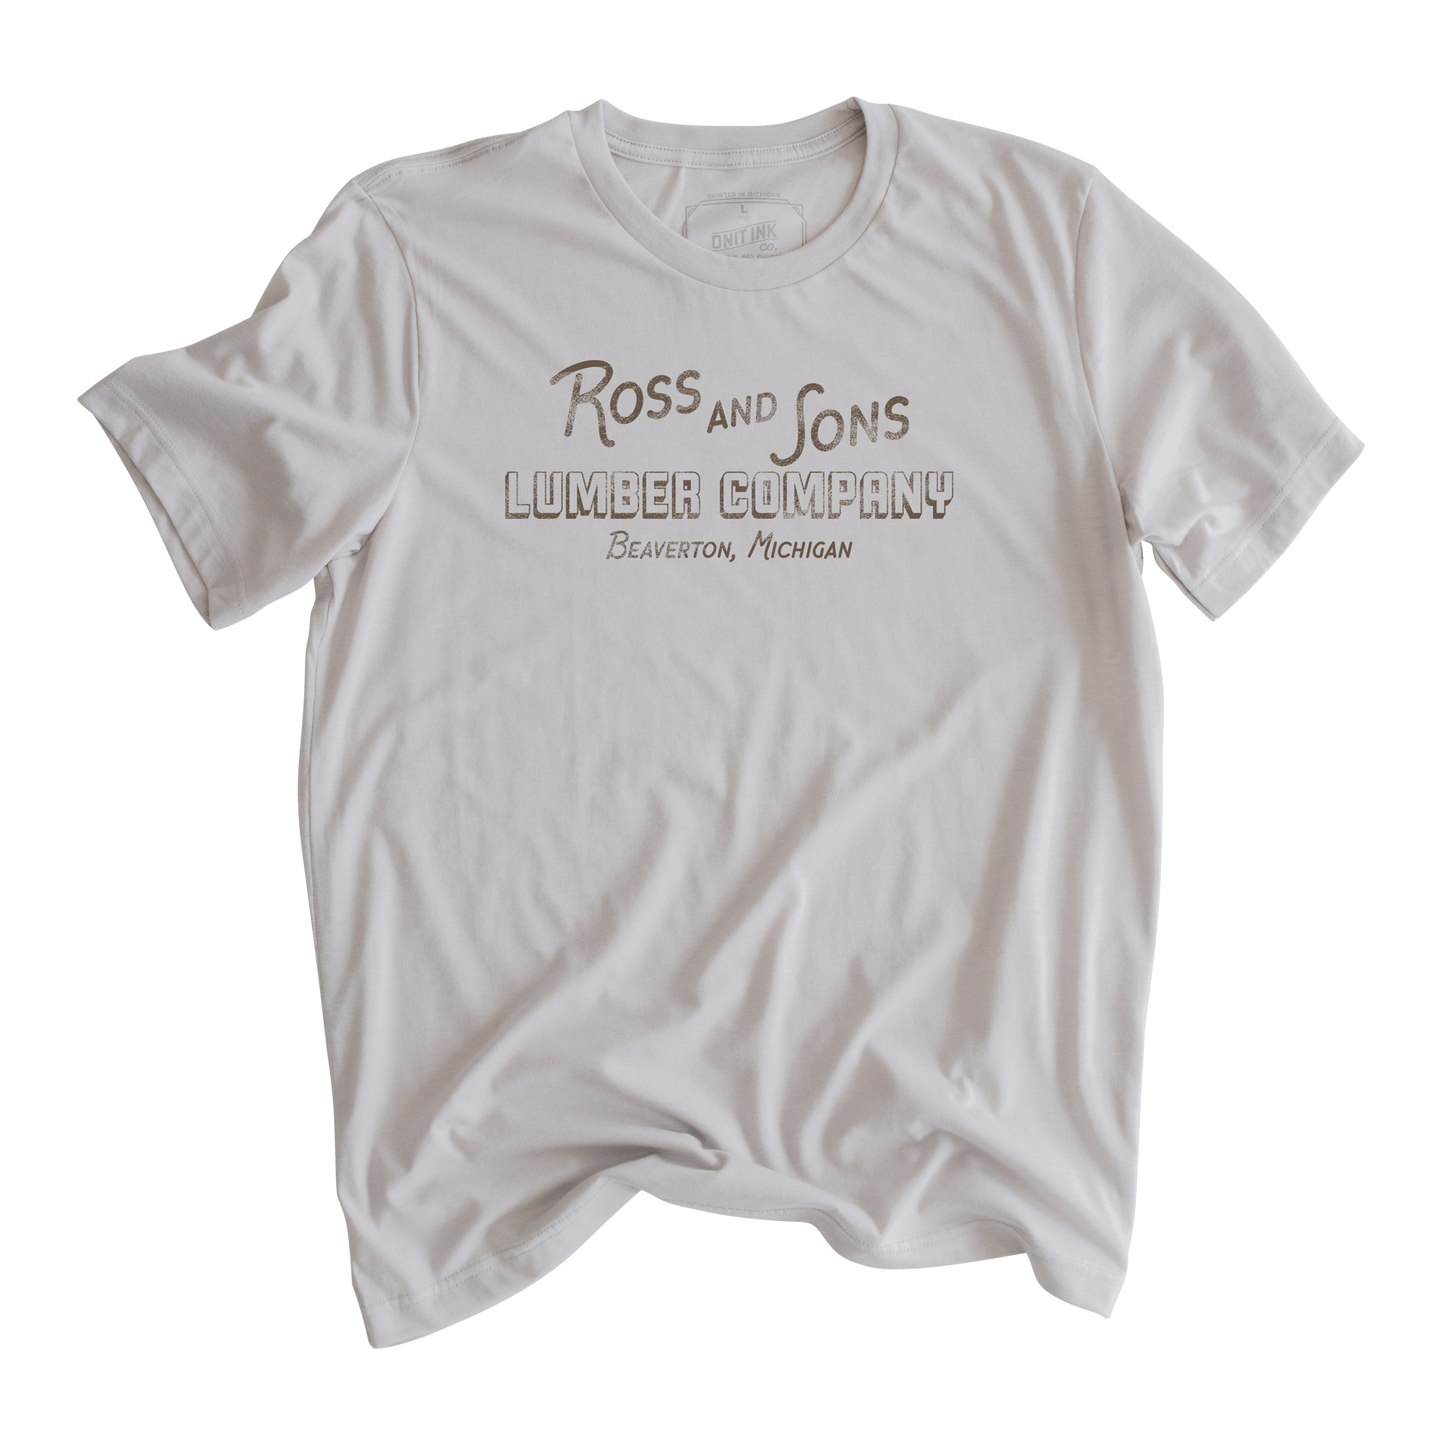 Ross and Sons Lumber Company, Beaverton Michigan T-Shirt